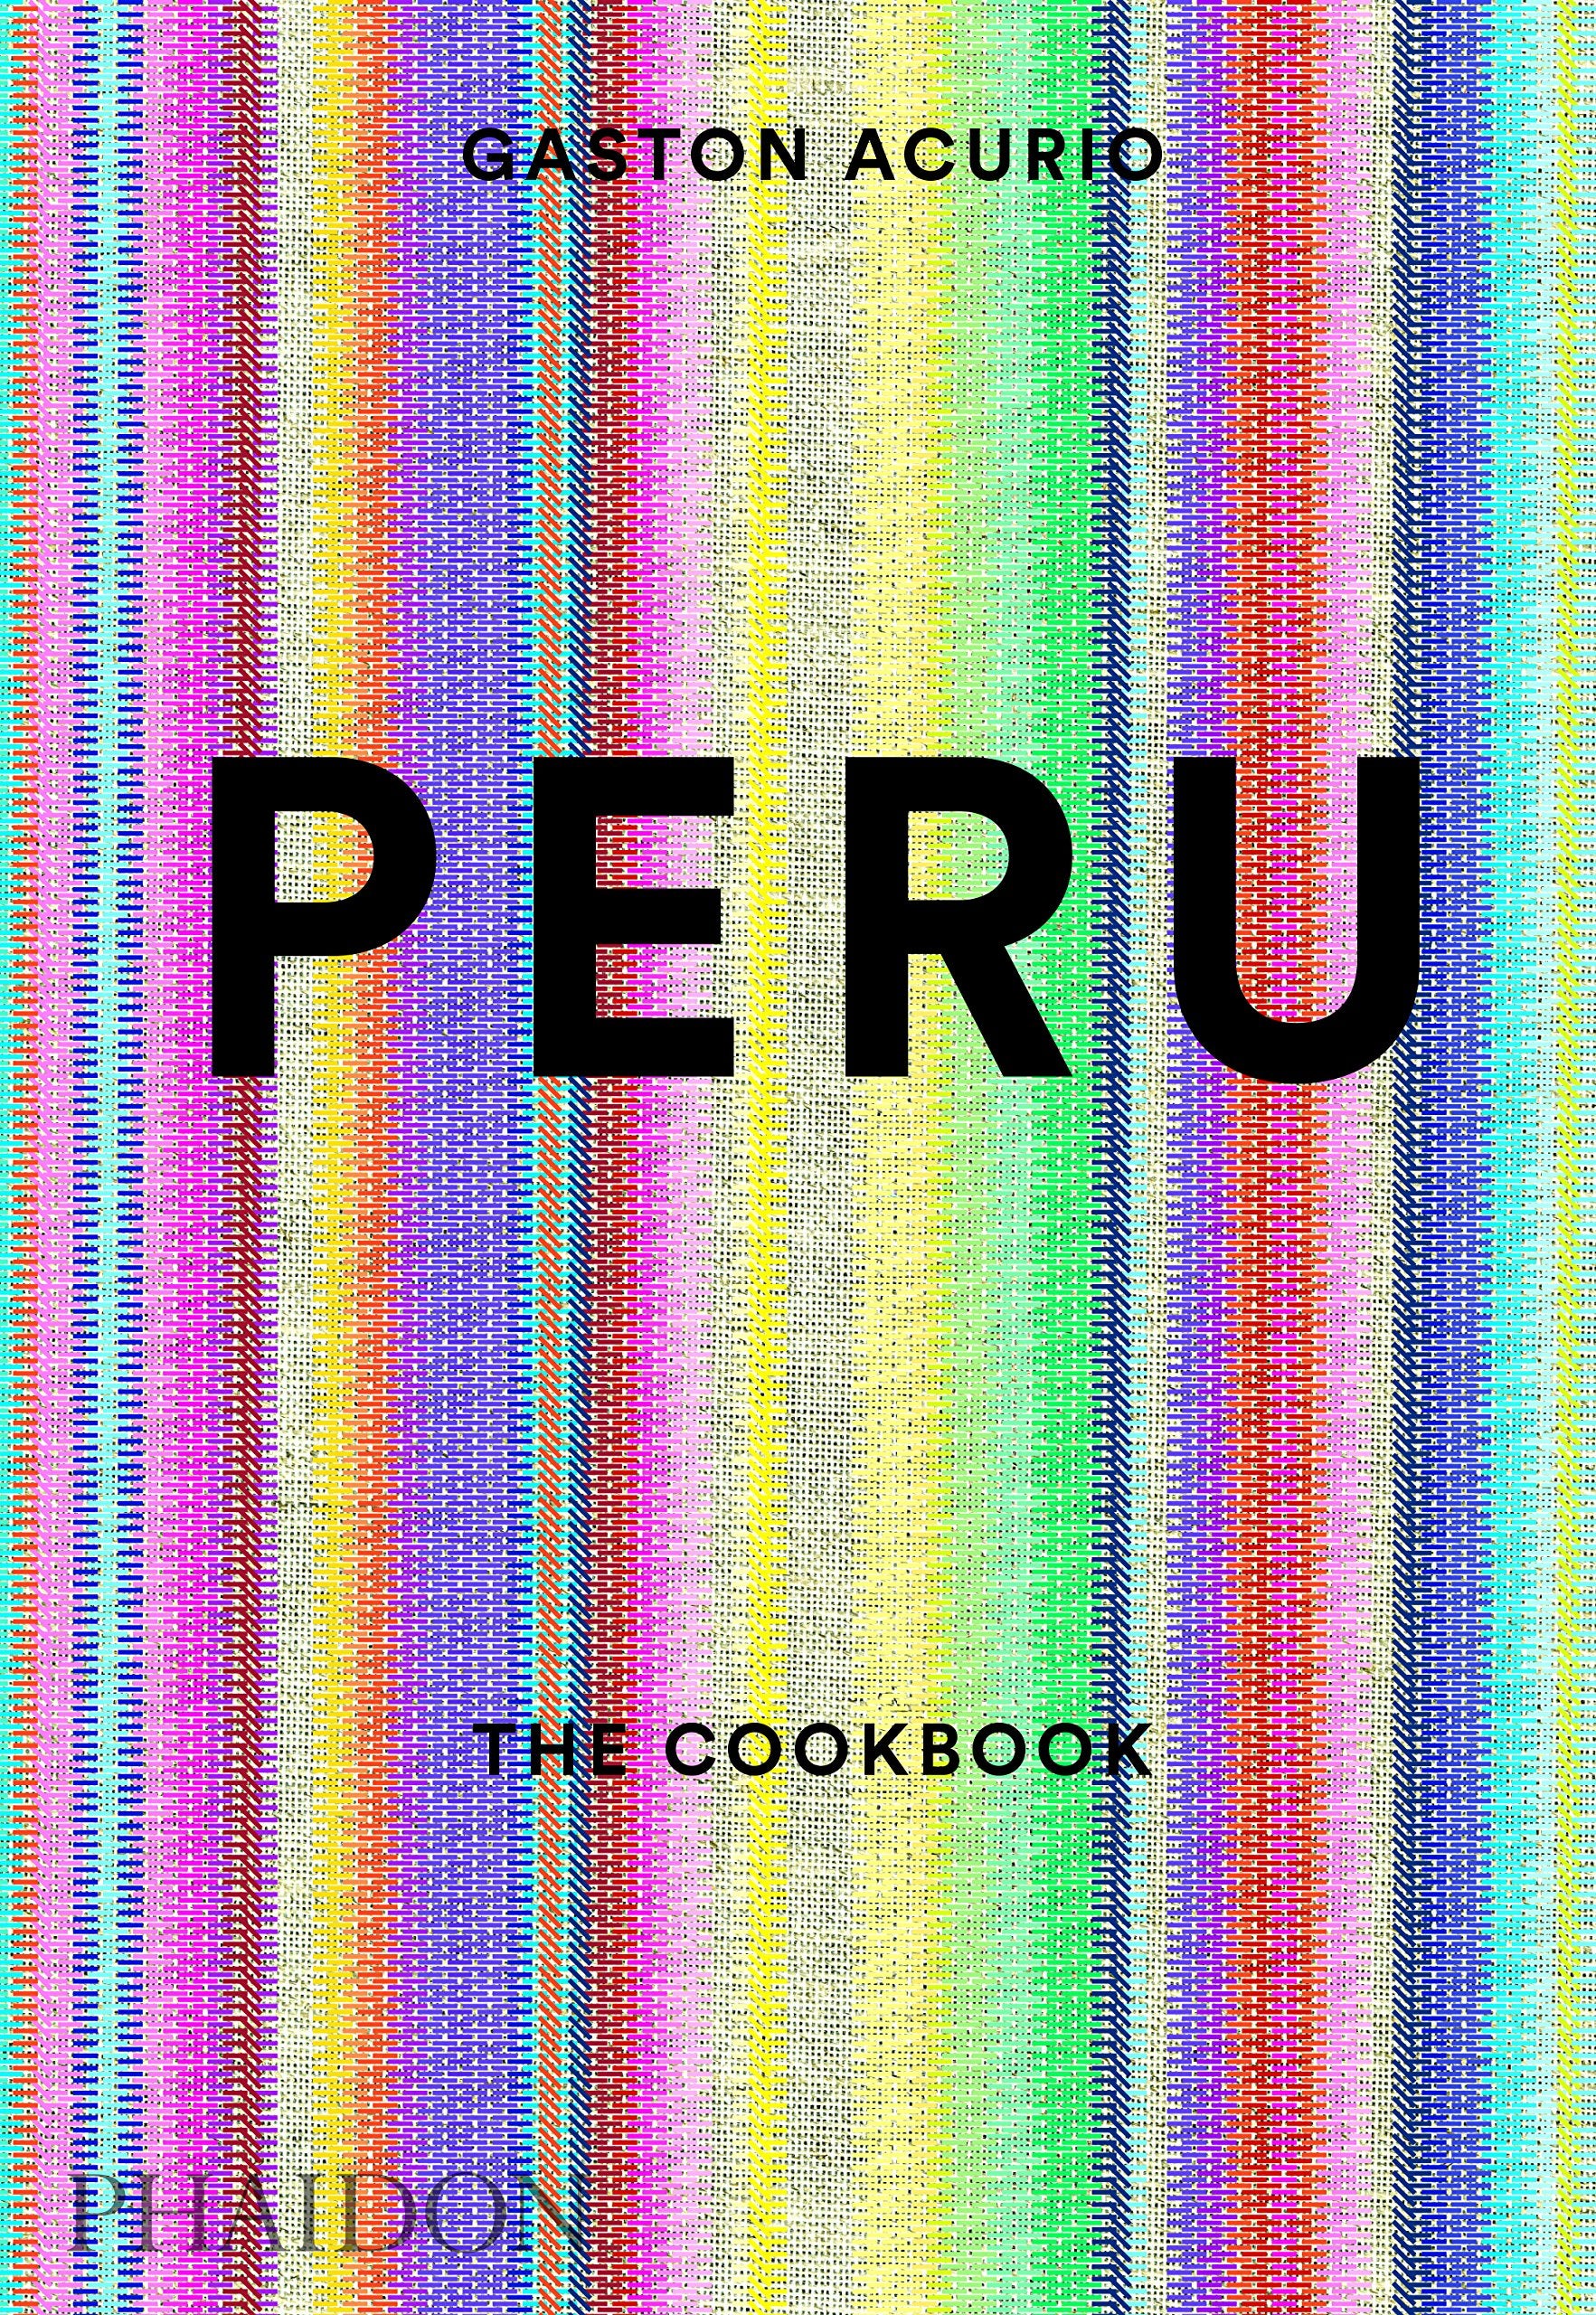 Peru: The Cookbook (Gaston Acurio)